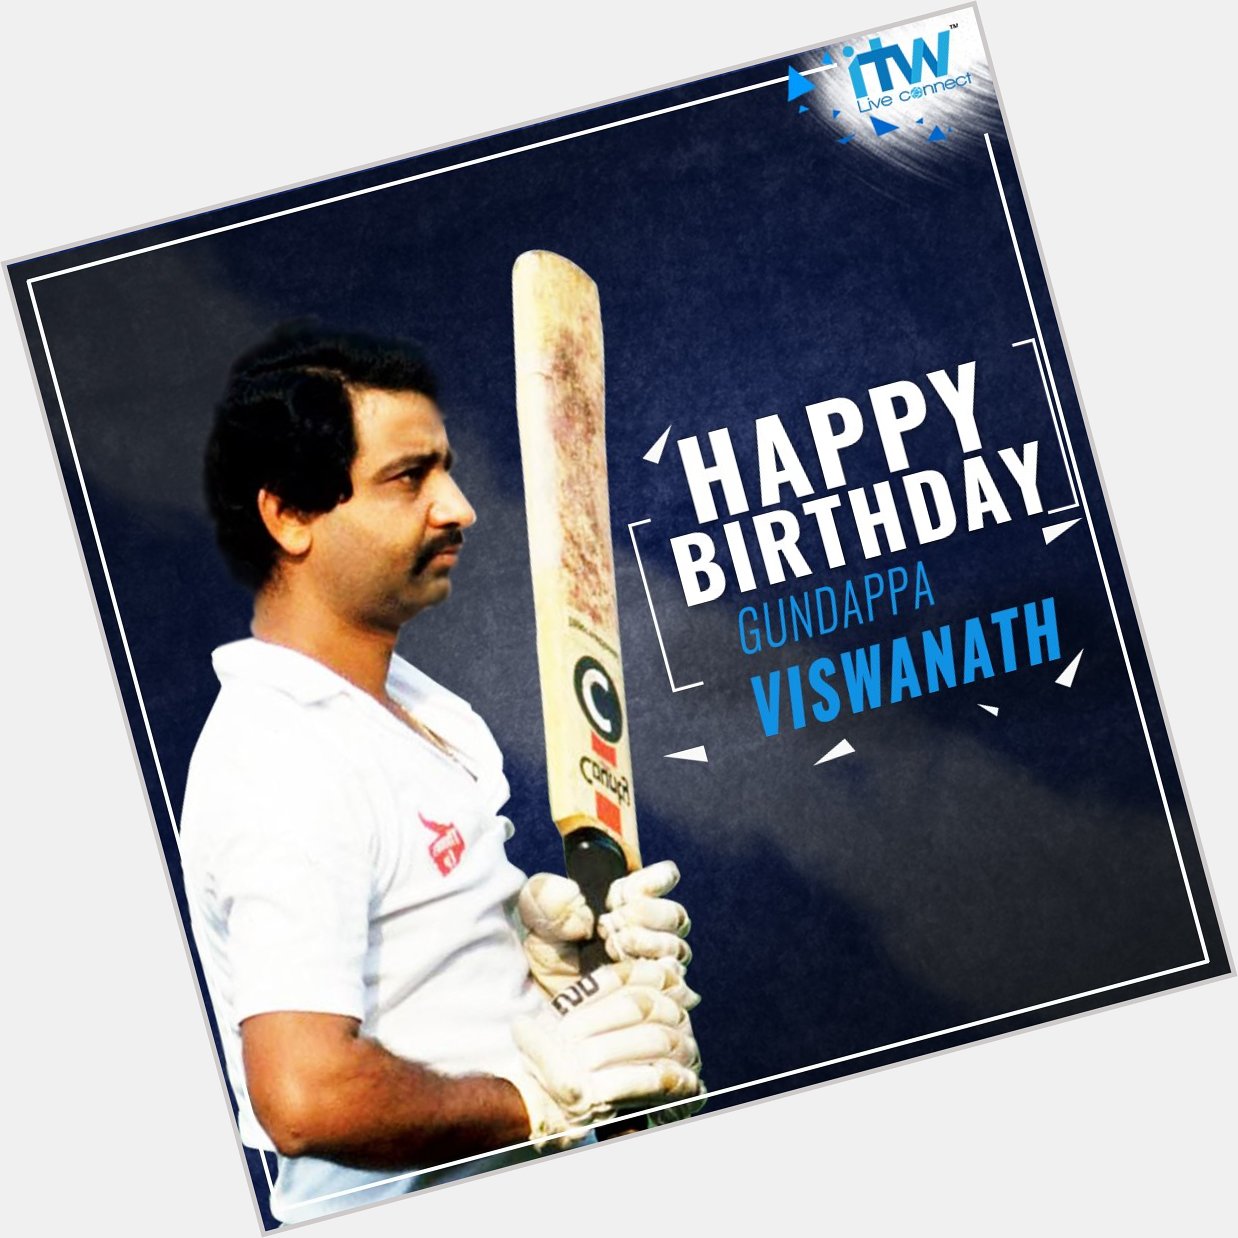 Wishing a very Happy Birthday to one of the finest batsman India have produced, Gundappa Viswanath! 